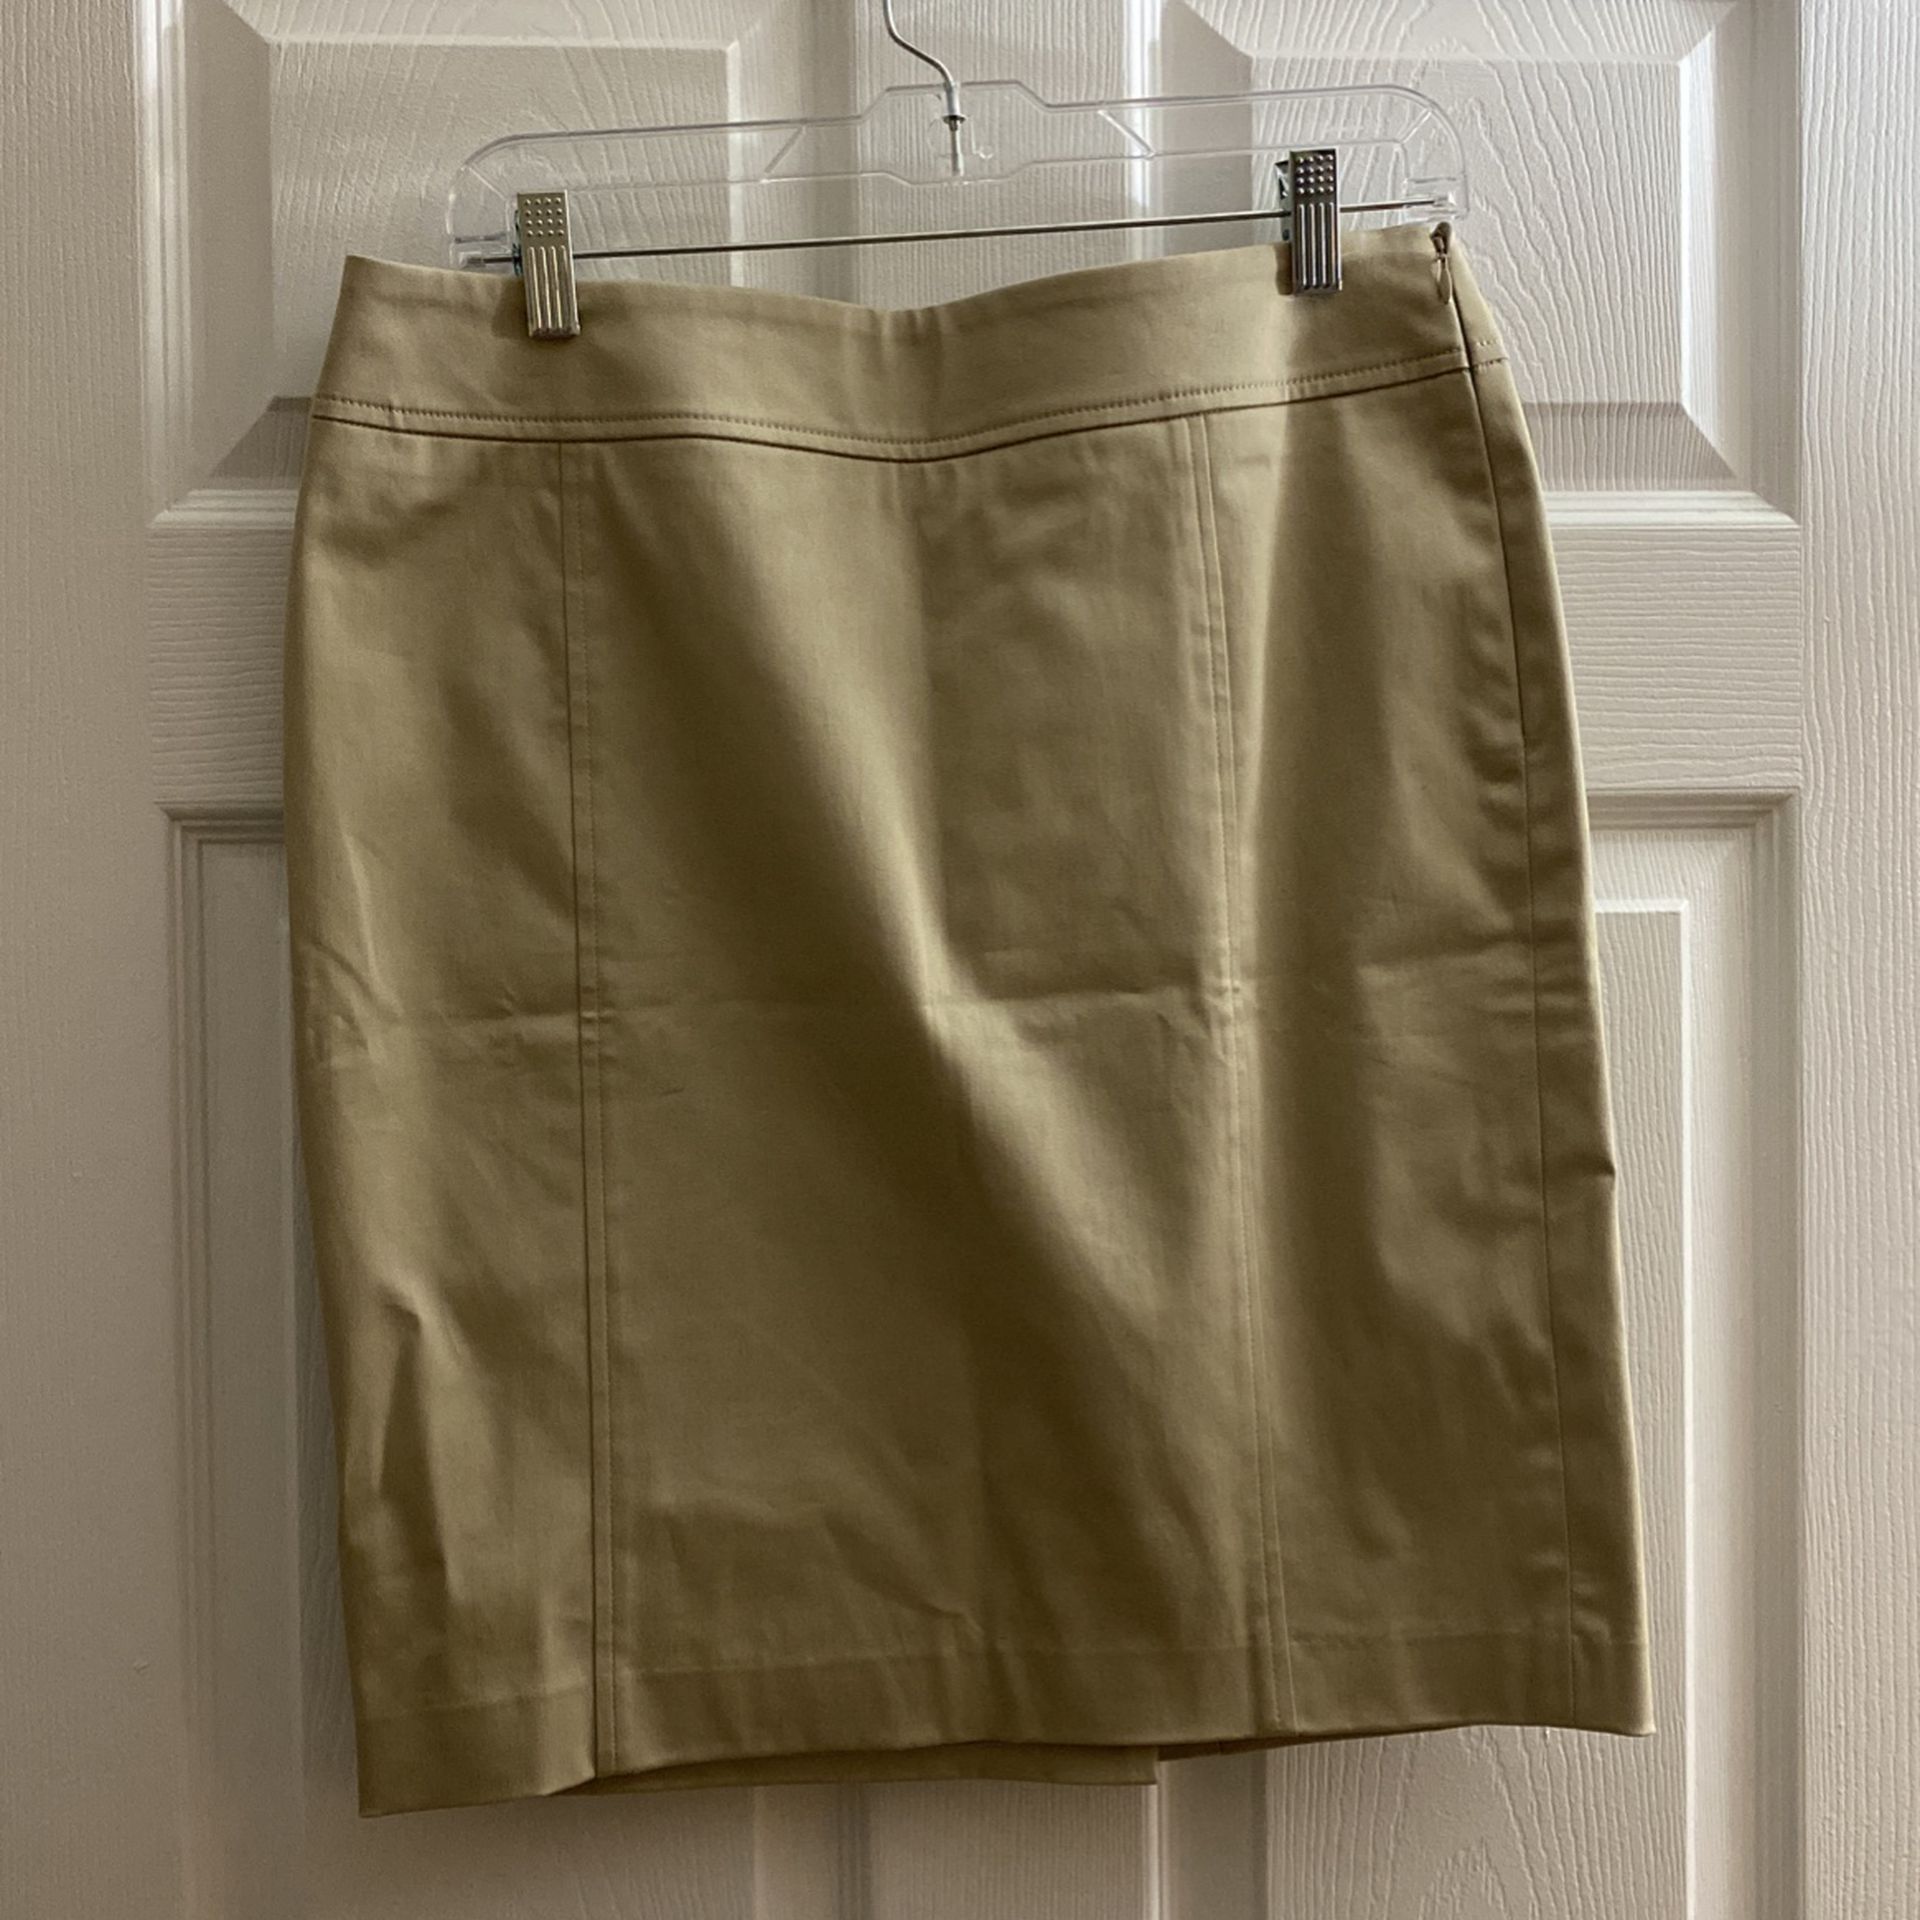 Loft Pencil Skirt - 10P